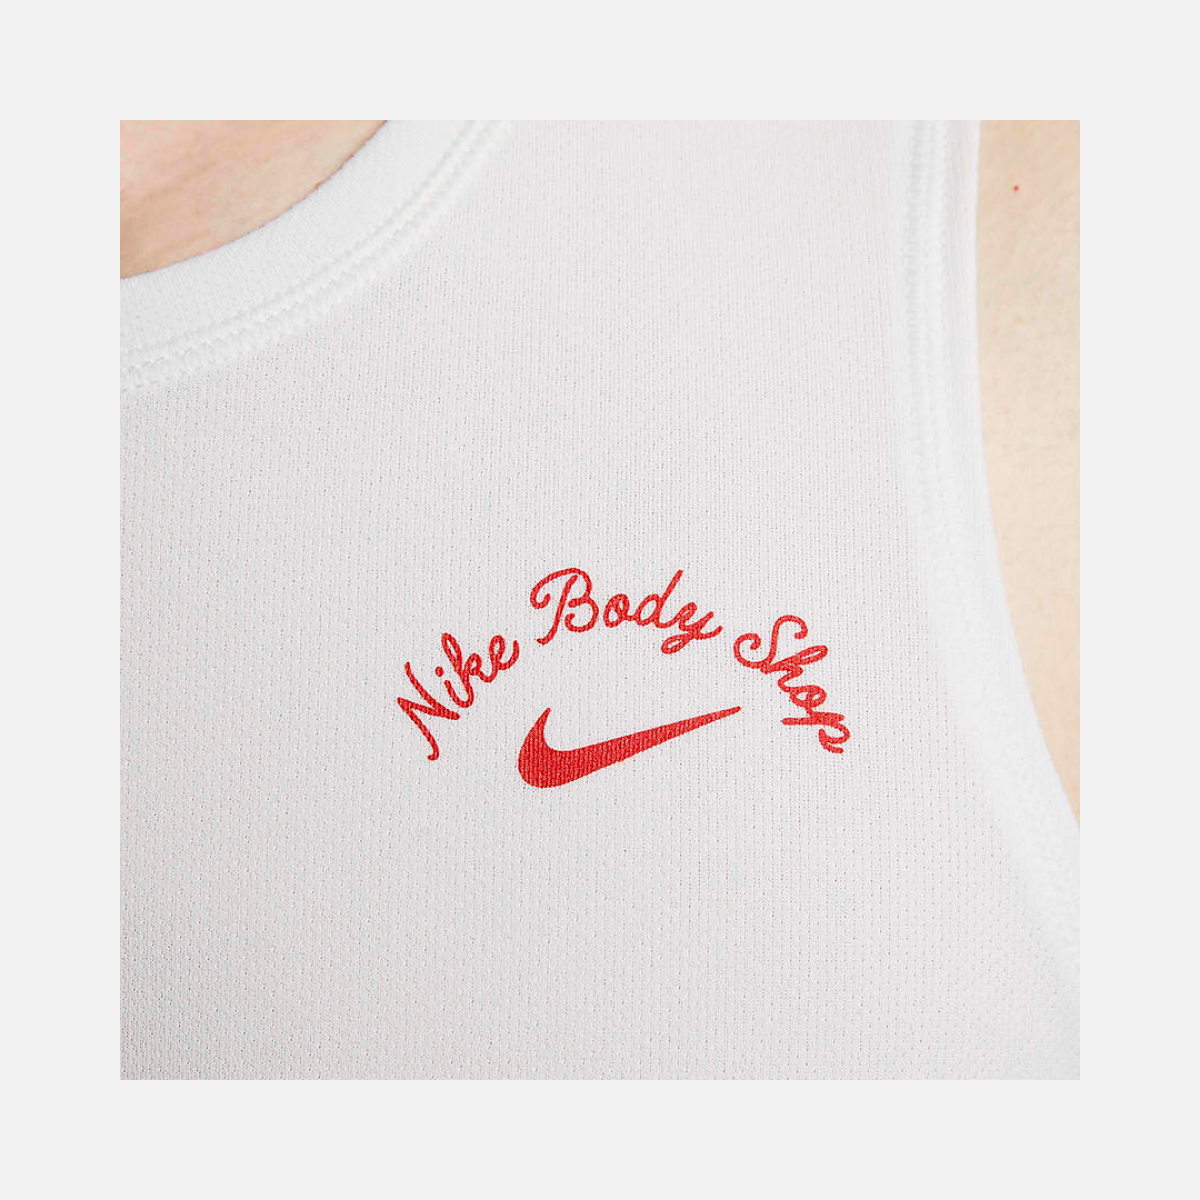 Nike Dri-FIT Miler Men's Running Tank -White/red